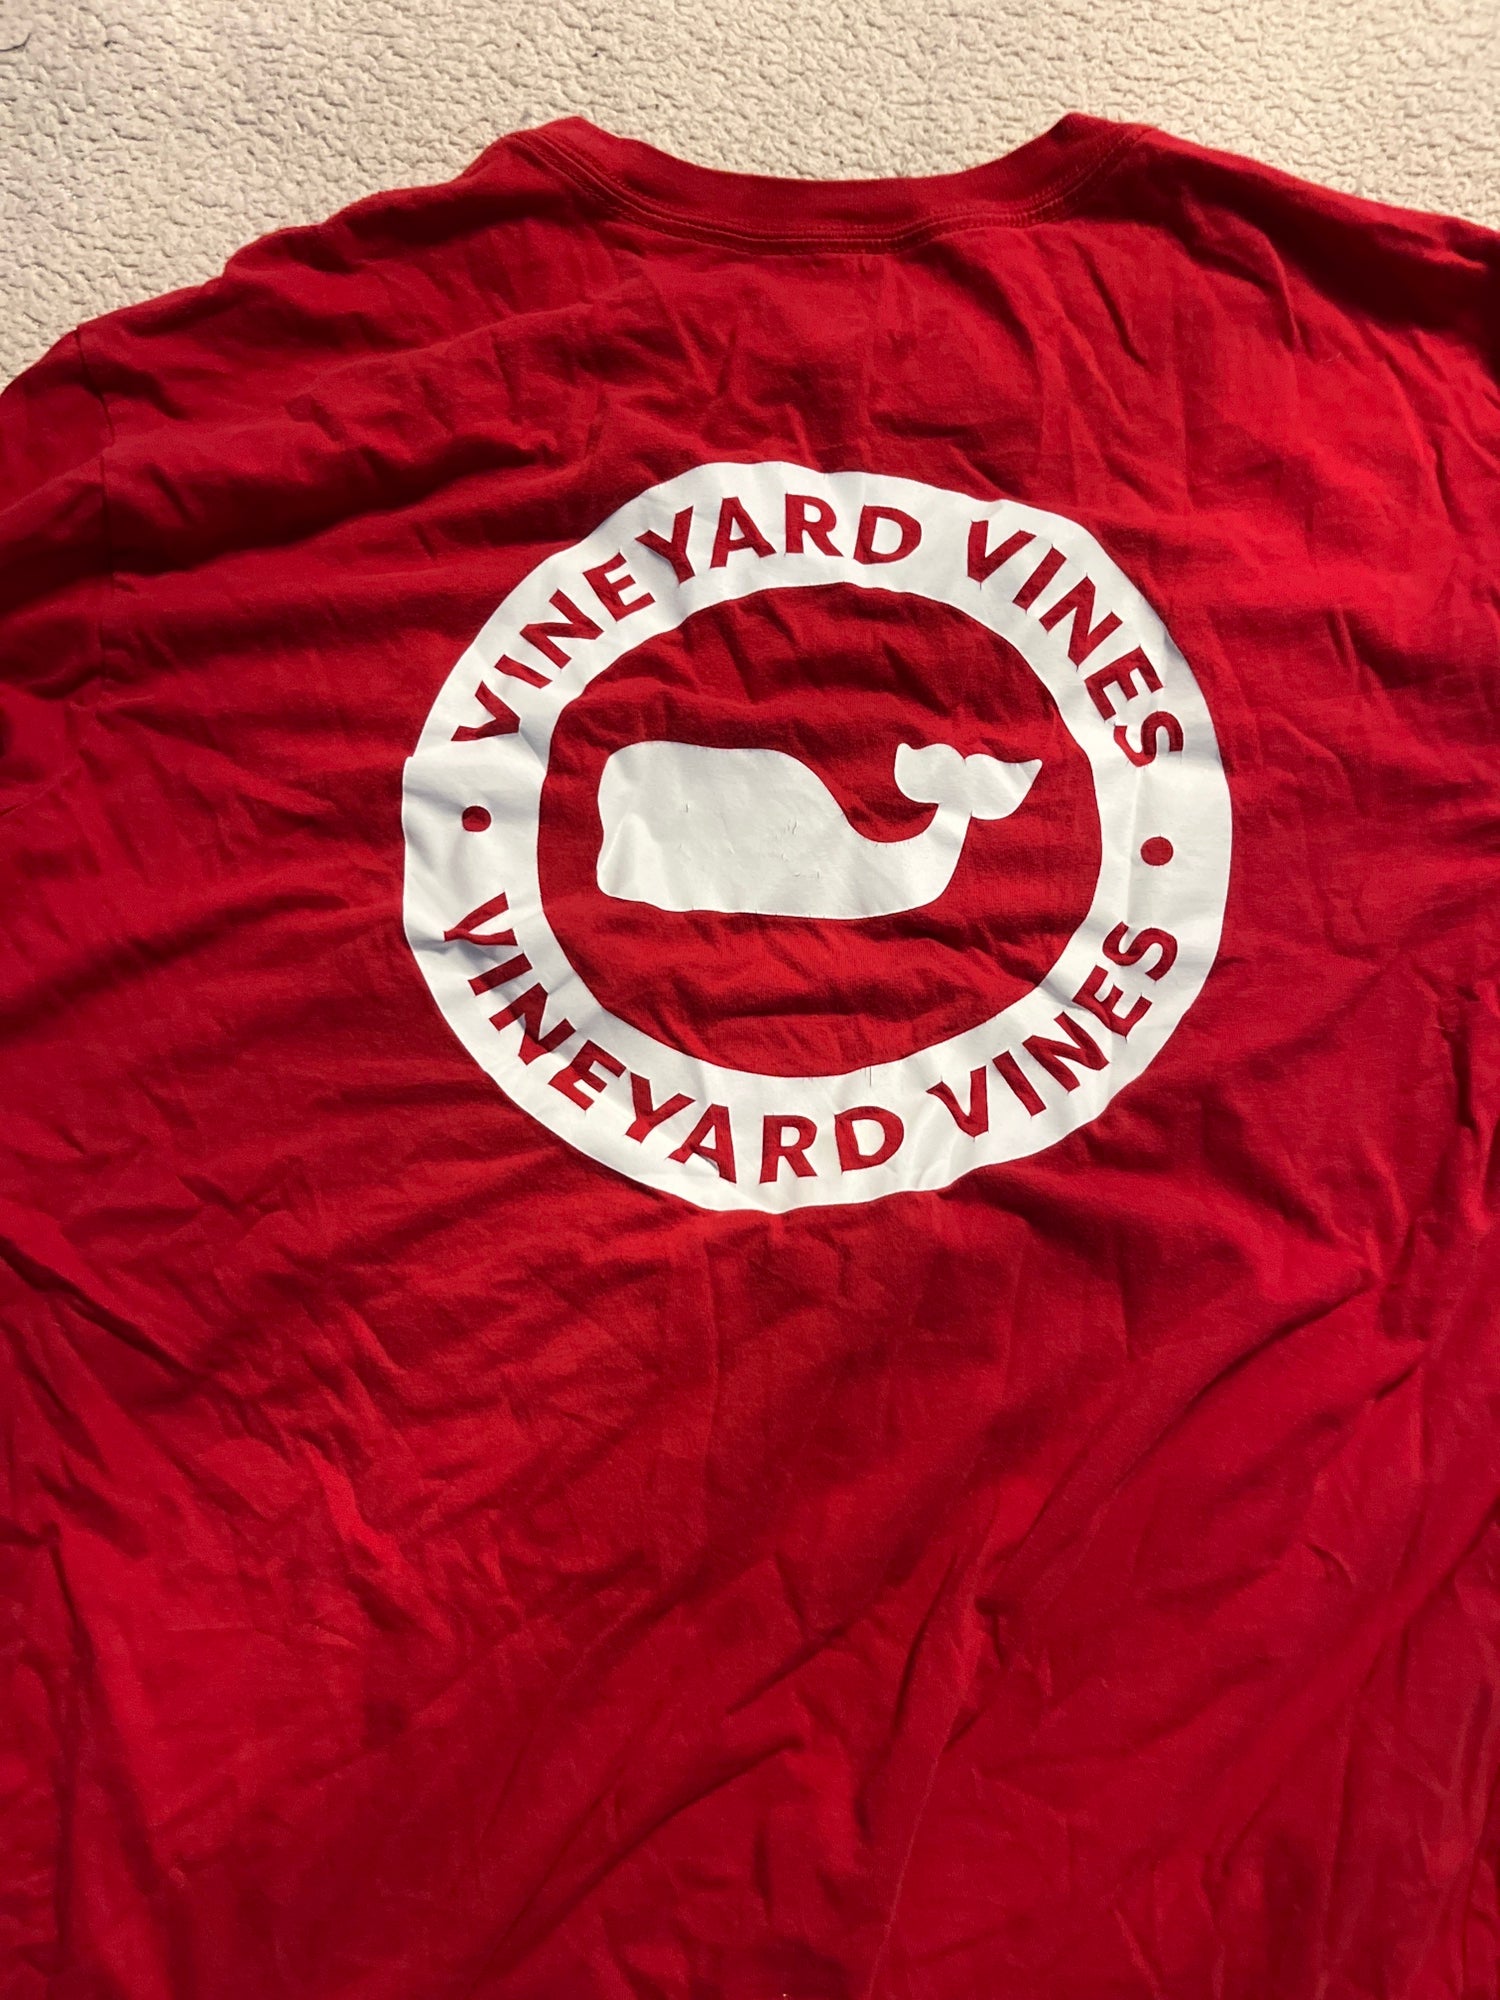 Men's Vineyard Vines White Auburn Tigers Football Whale Long Sleeve T-Shirt